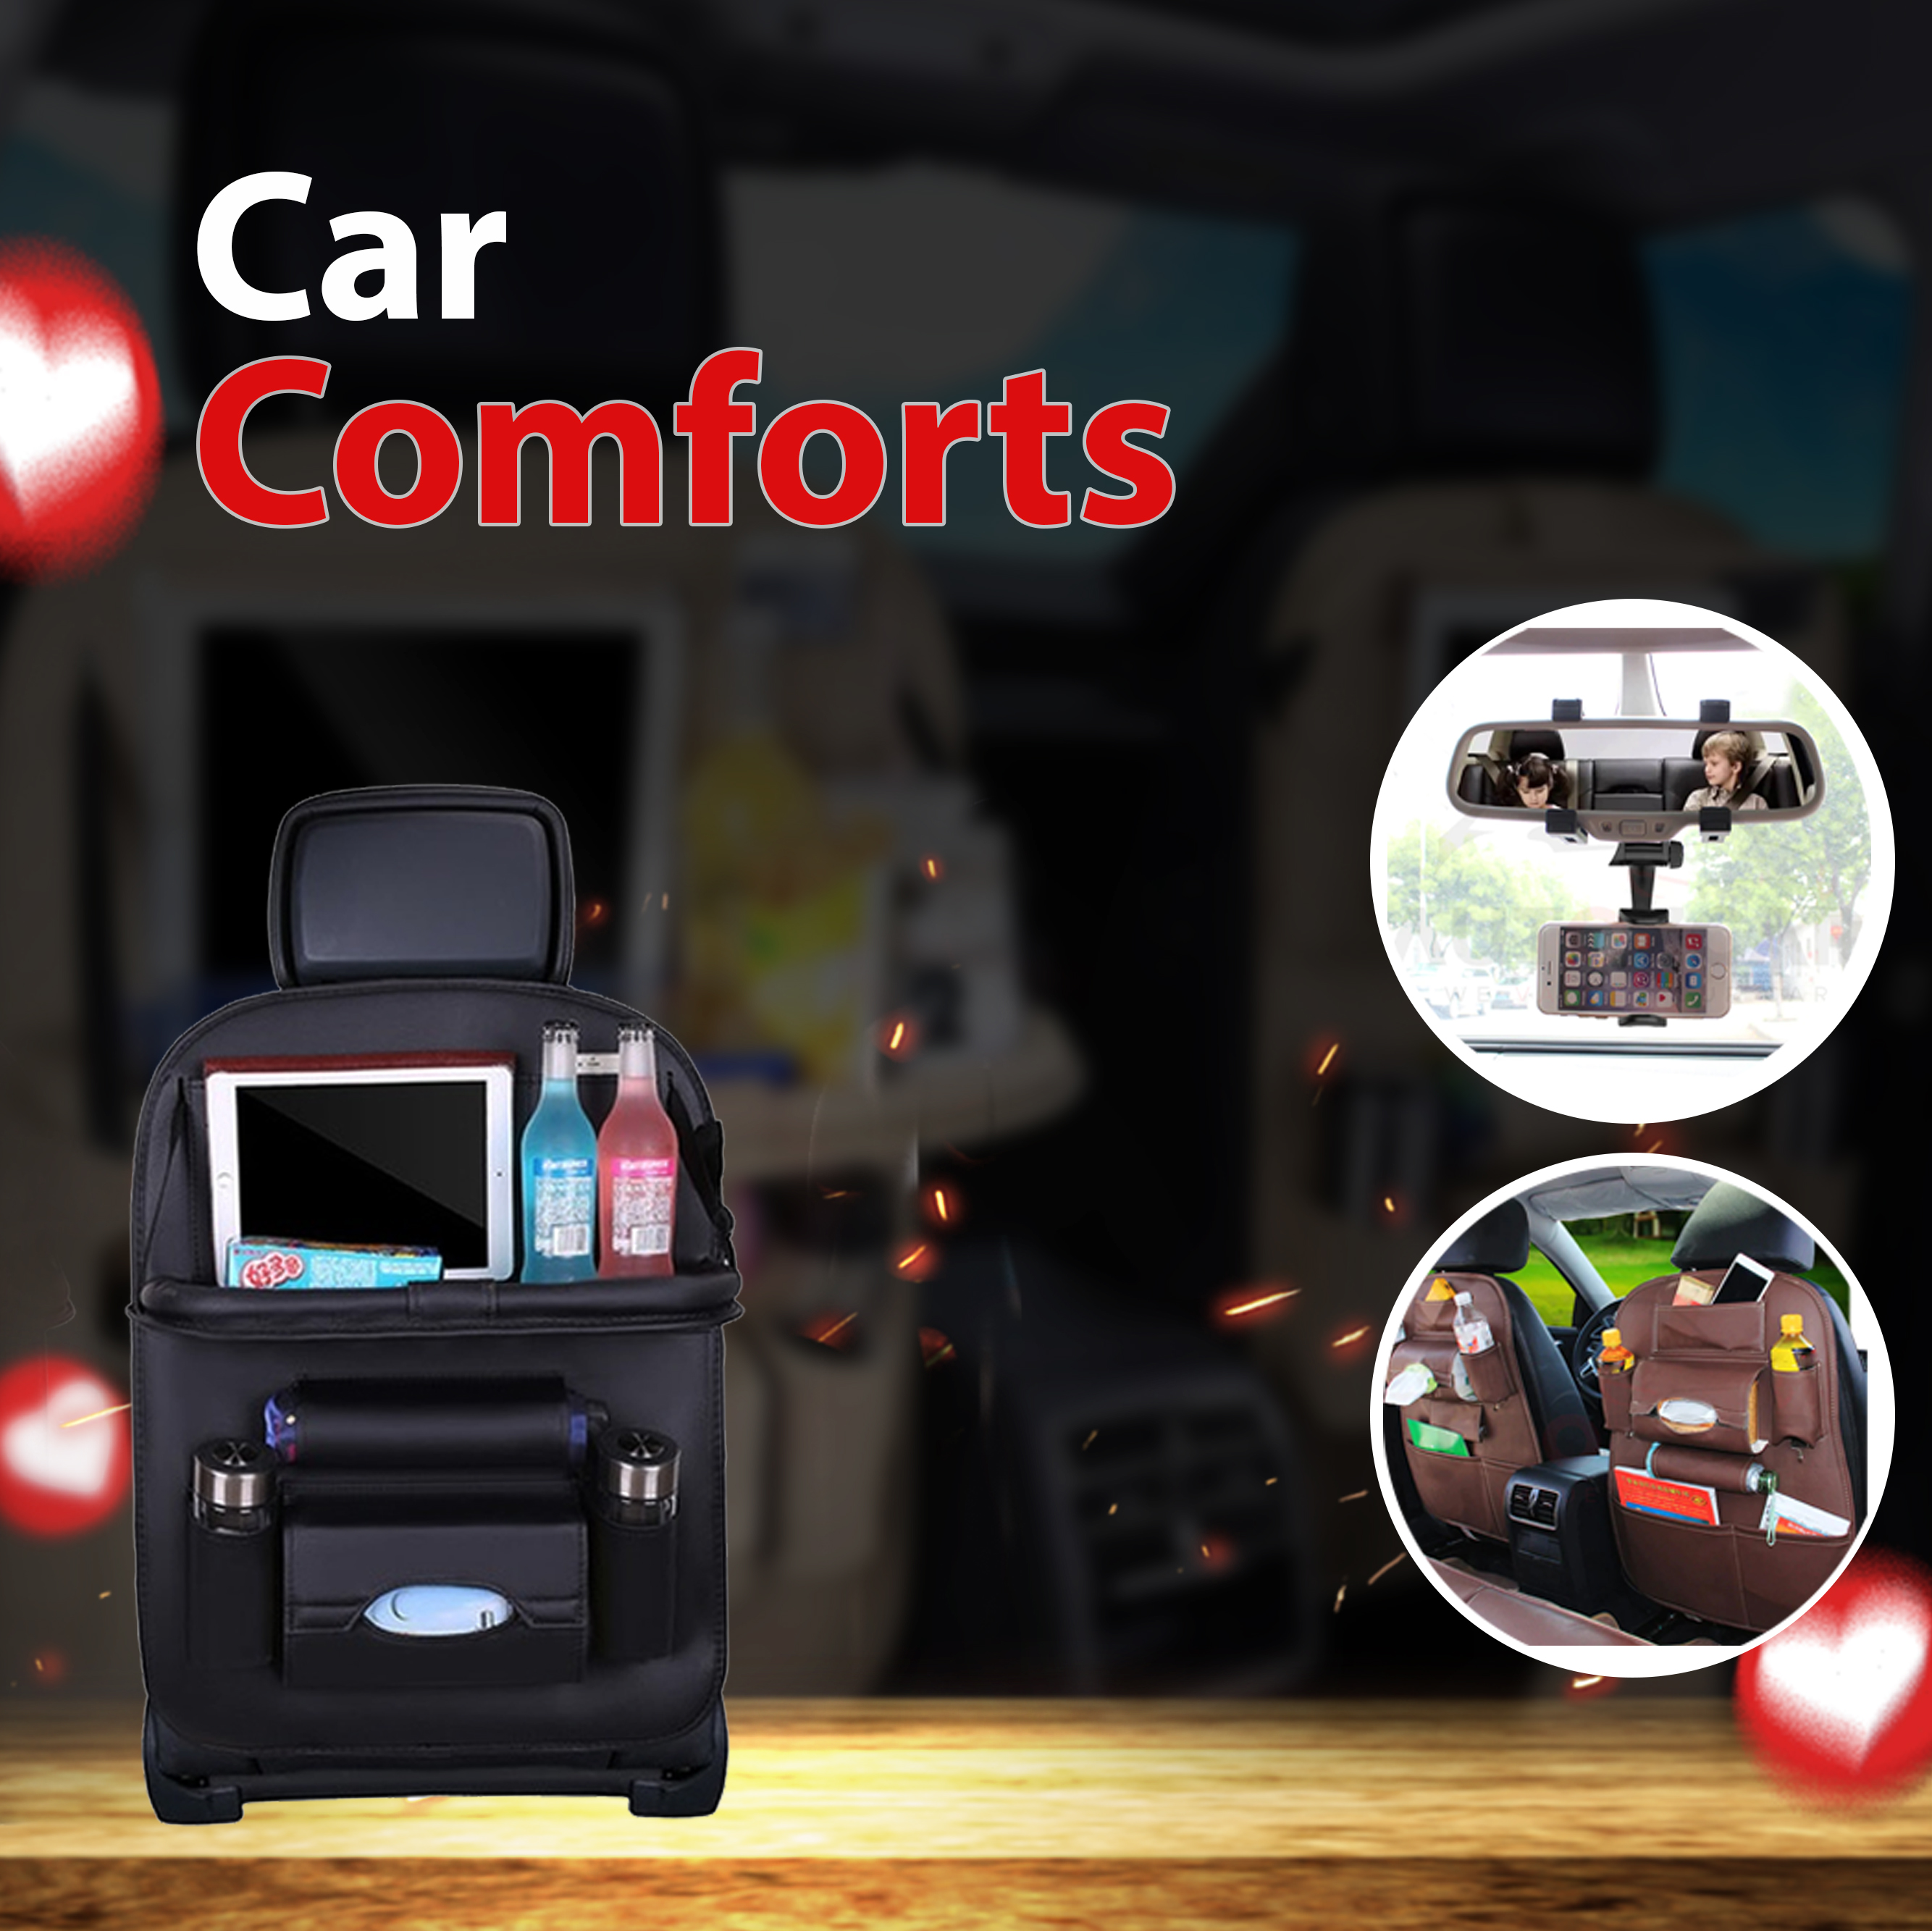 Car Comforts